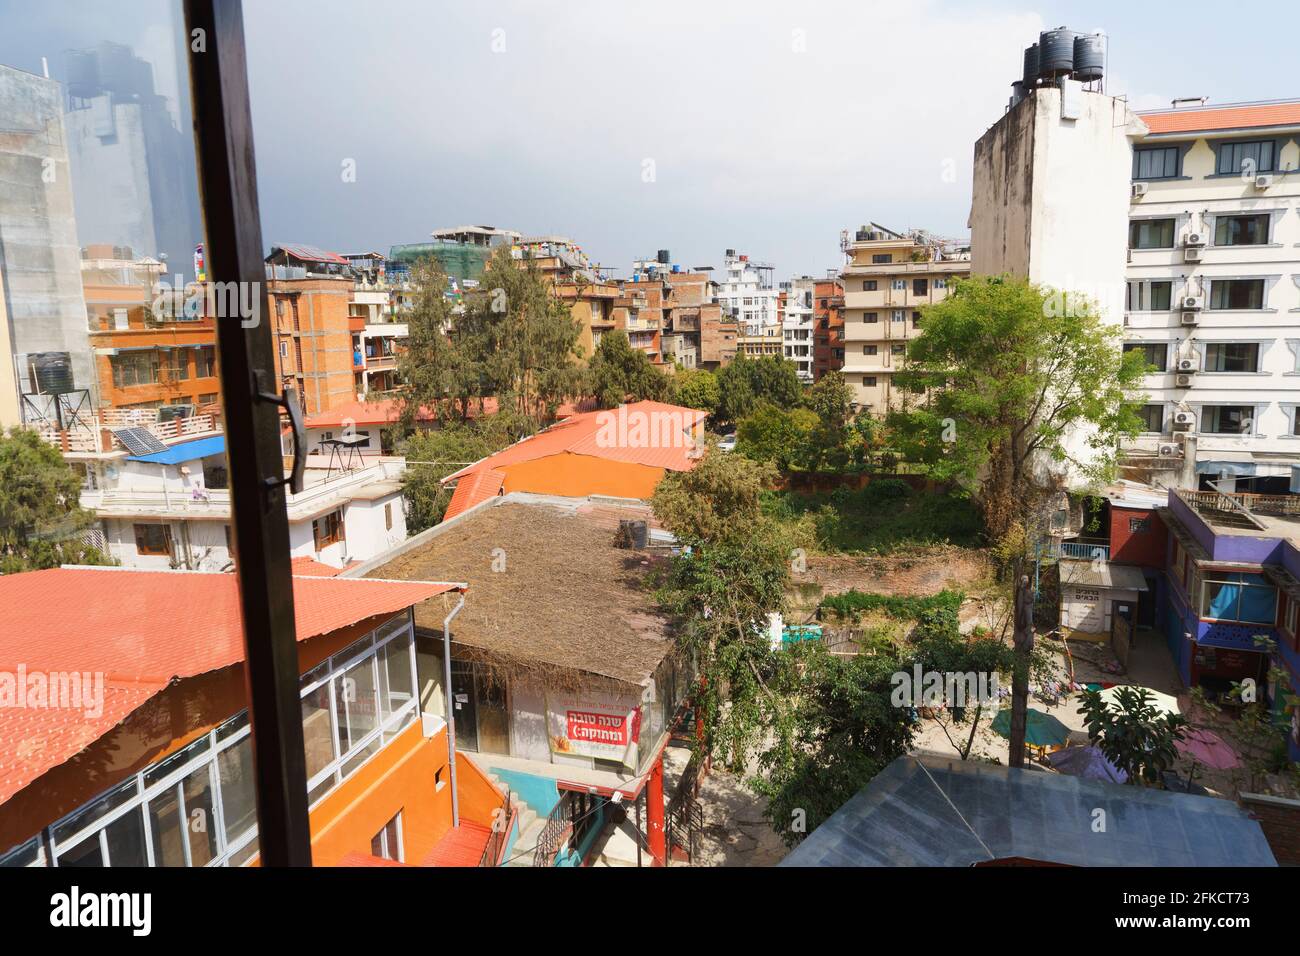 Buildings and backyards seen from a window, Thamel district, Kathmandu, Nepal. Stock Photo